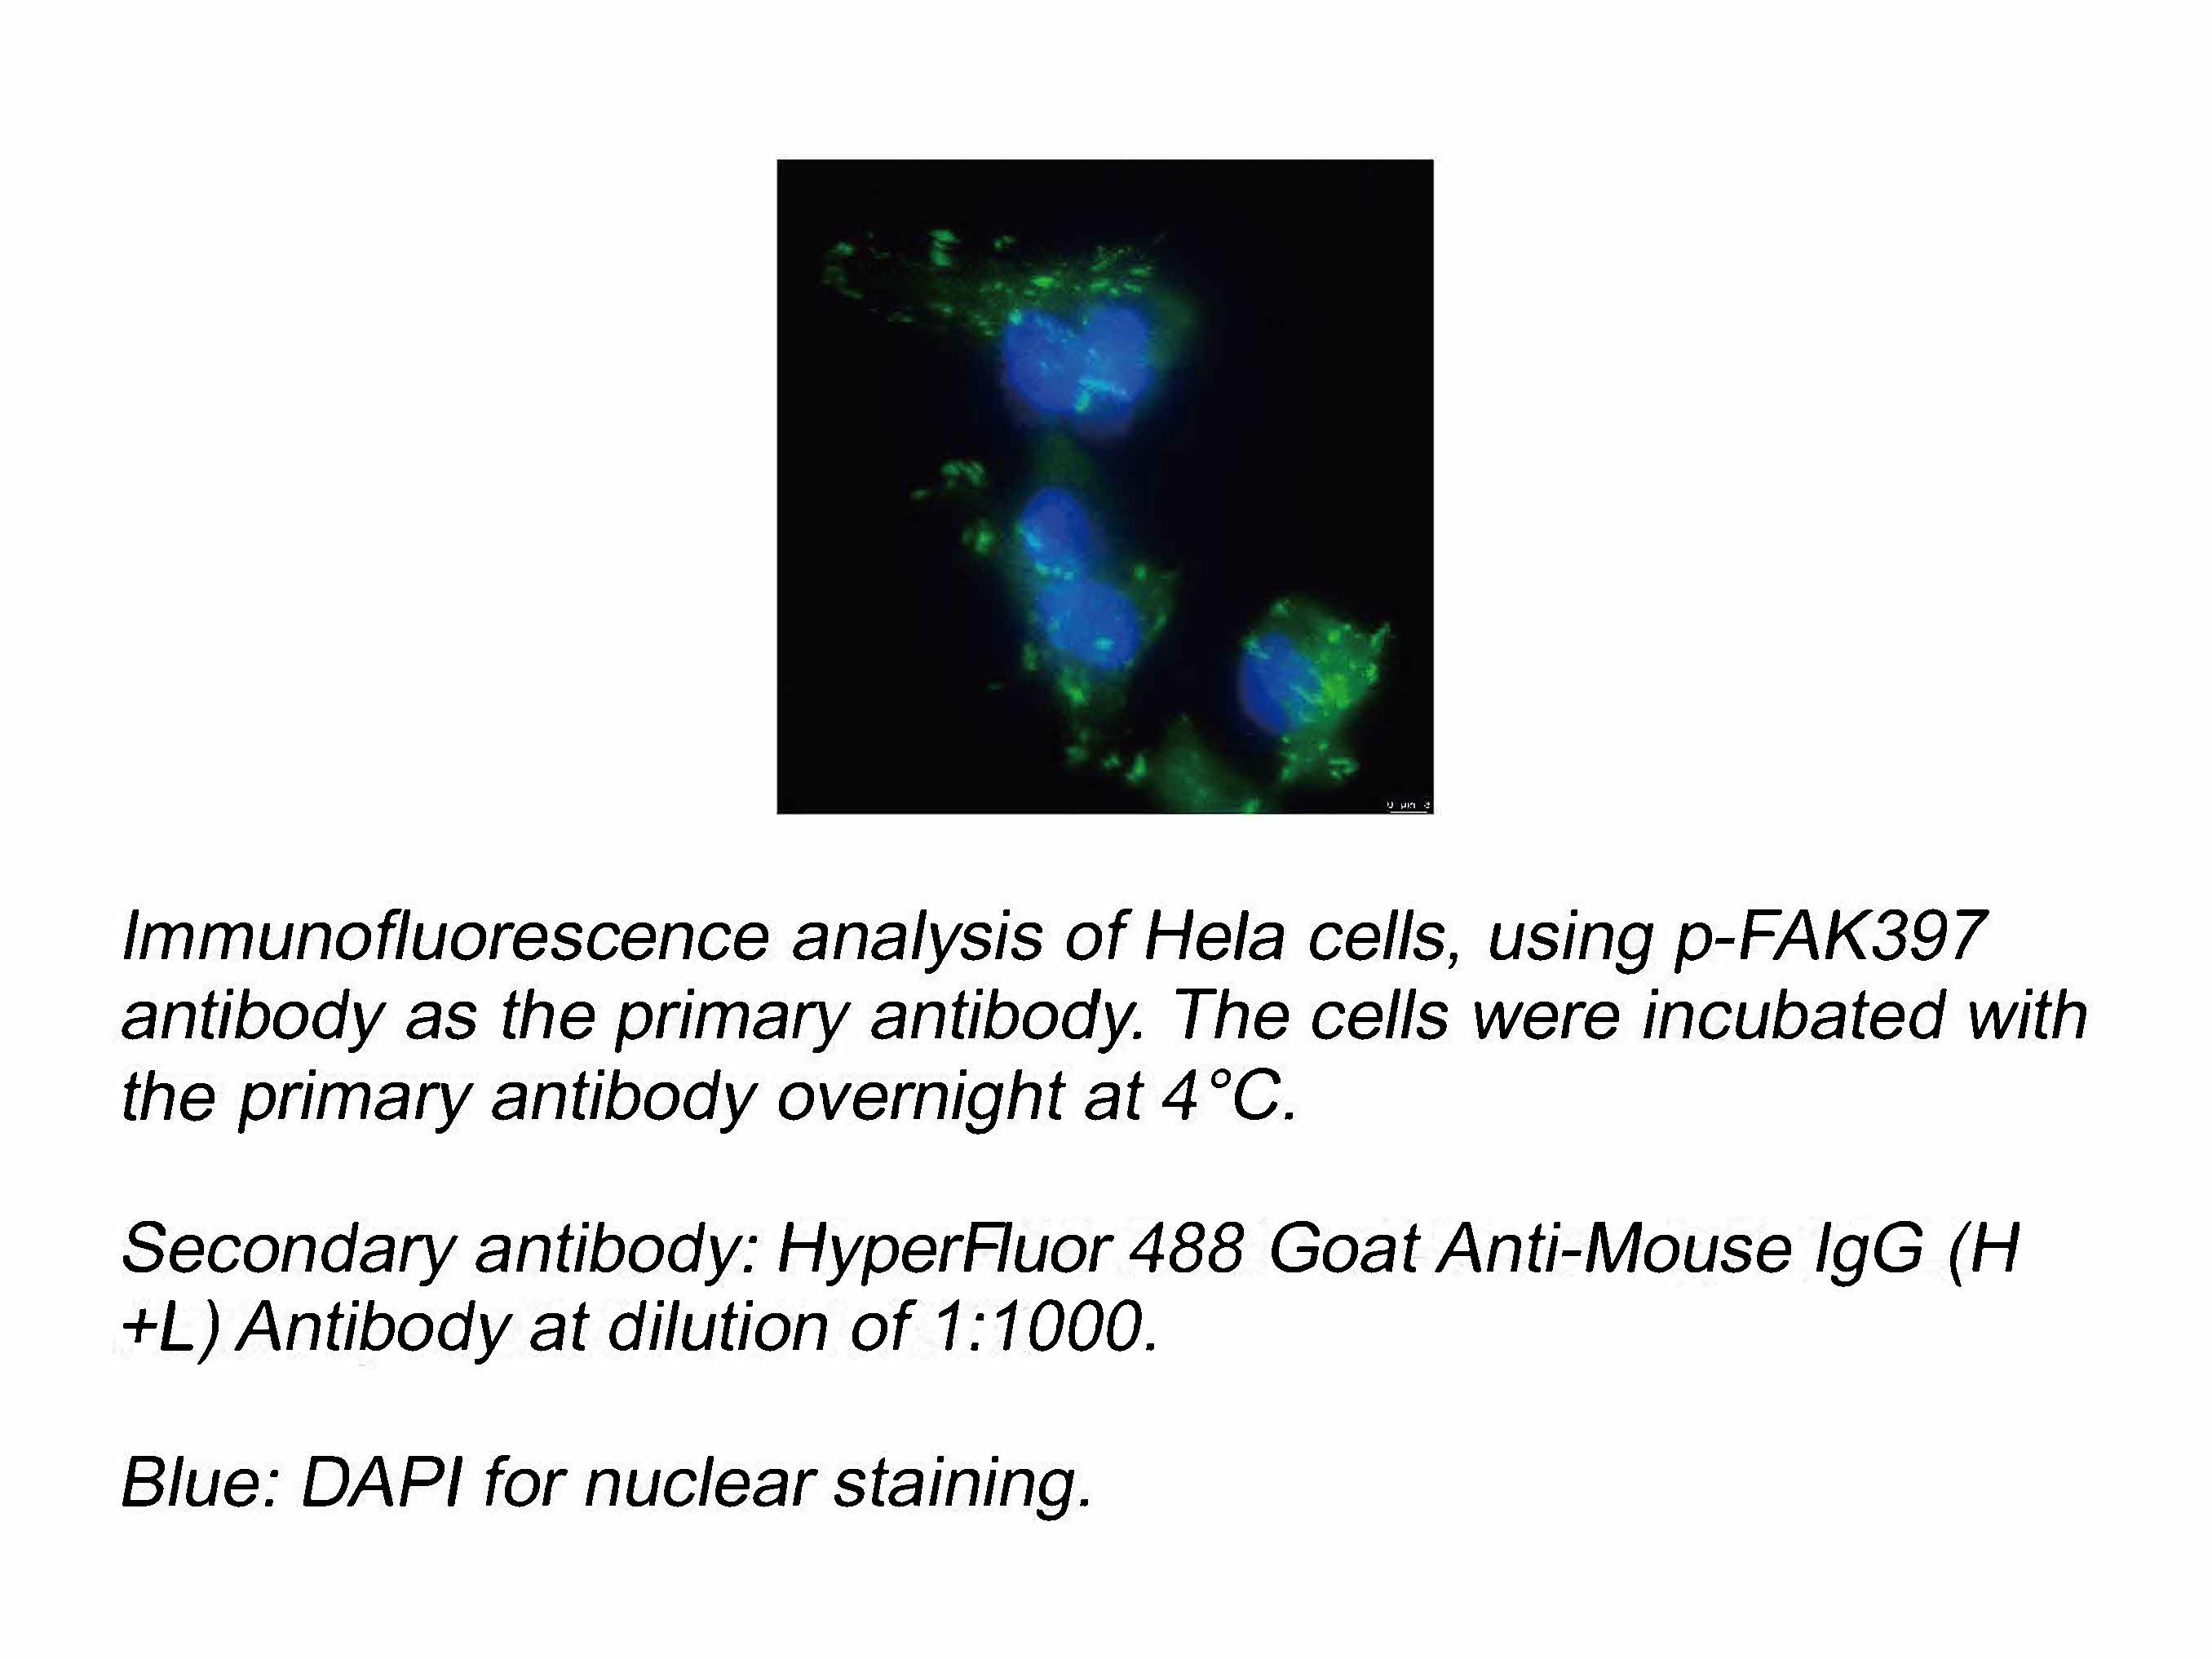 HyperFluor™ 488 Goat Anti-Mouse IgG (H+L) Antibody